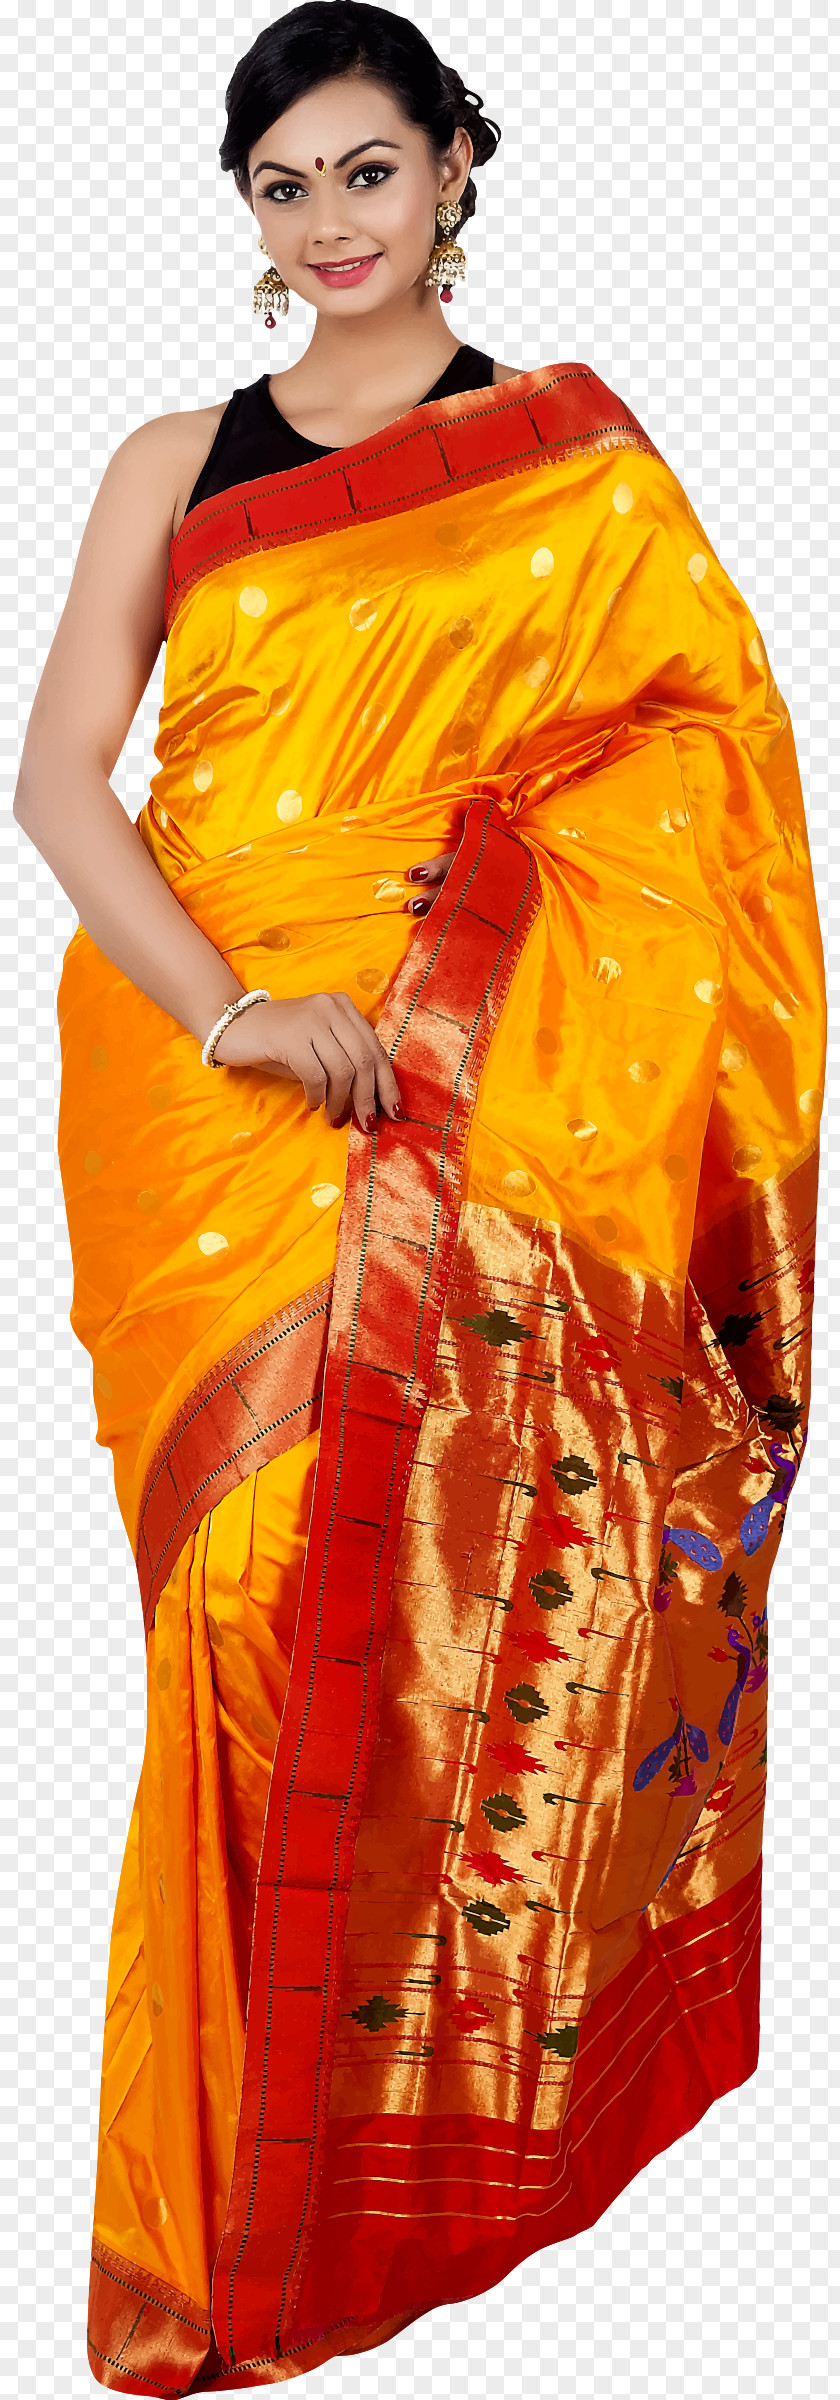 Paithani Wedding Sari Silk Clothing PNG sari Clothing, saree, woman wearing orange and red scarf clipart PNG